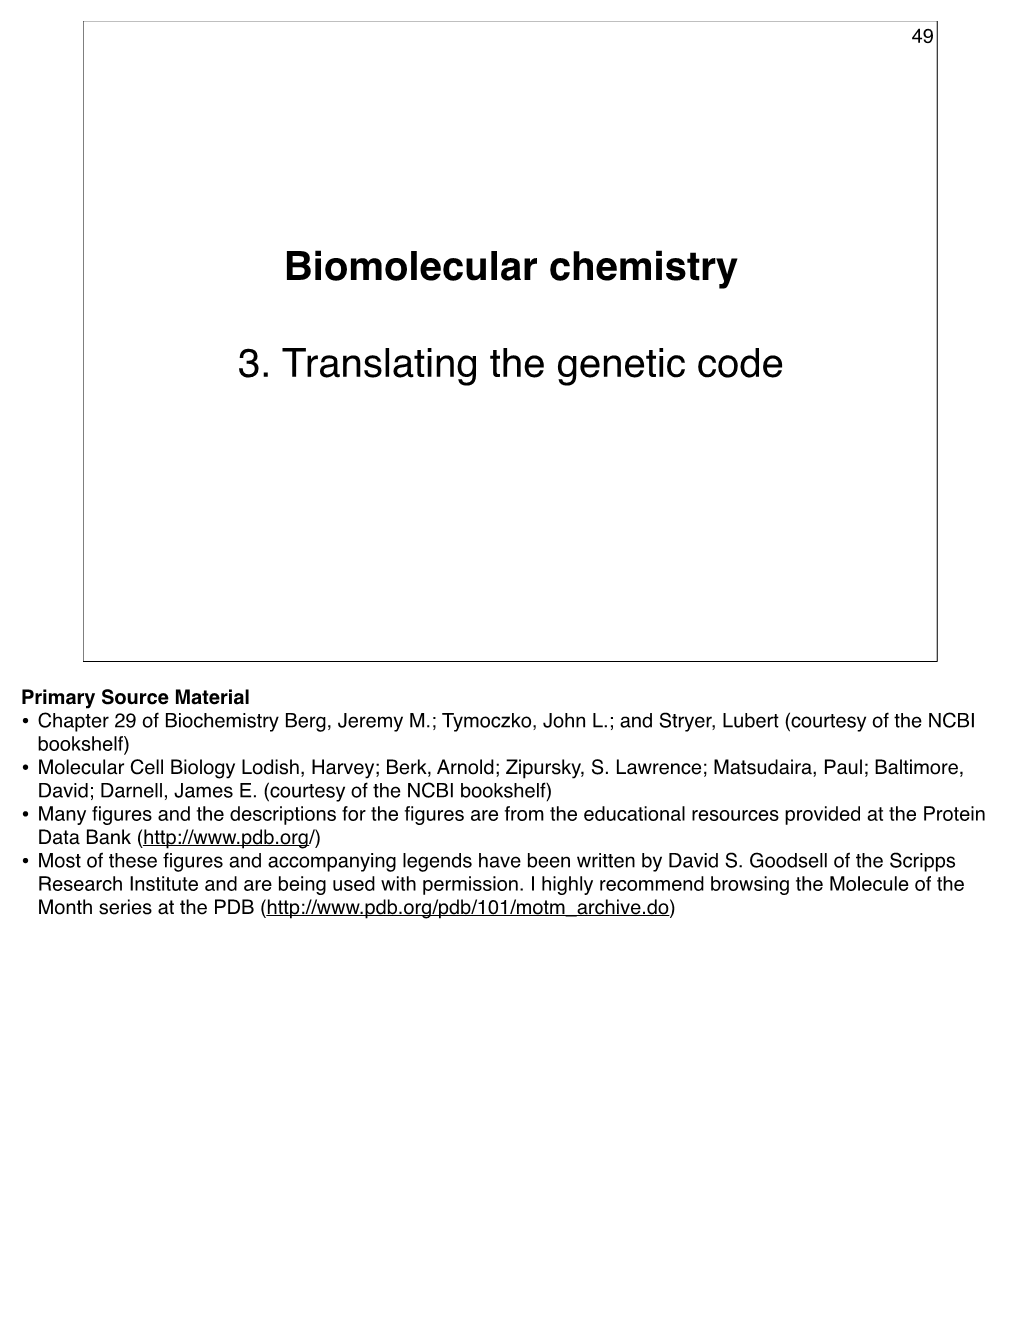 Biomolecular Chemistry 3. Translating the Genetic Code